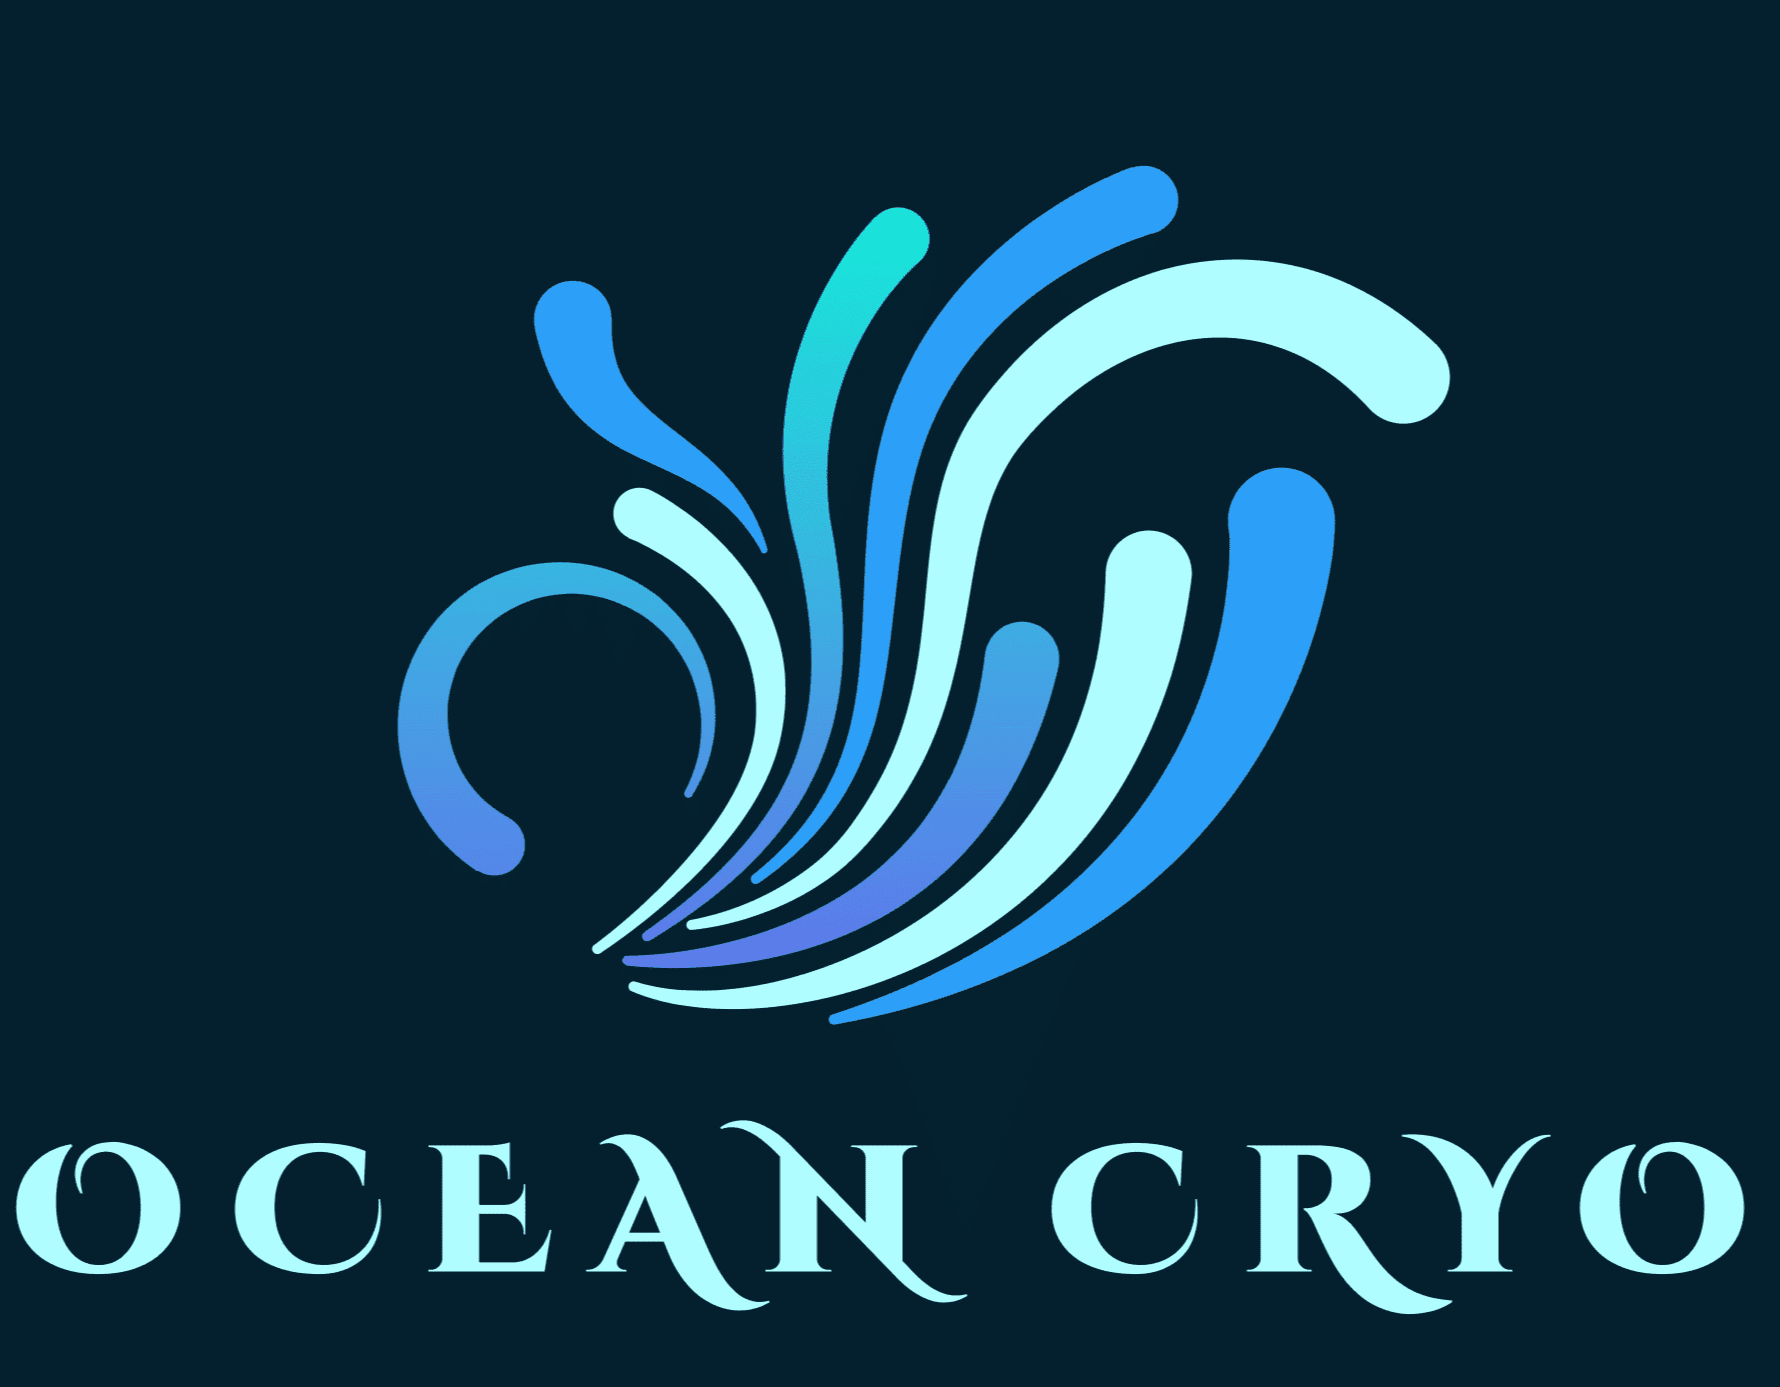 Ocean Cryo